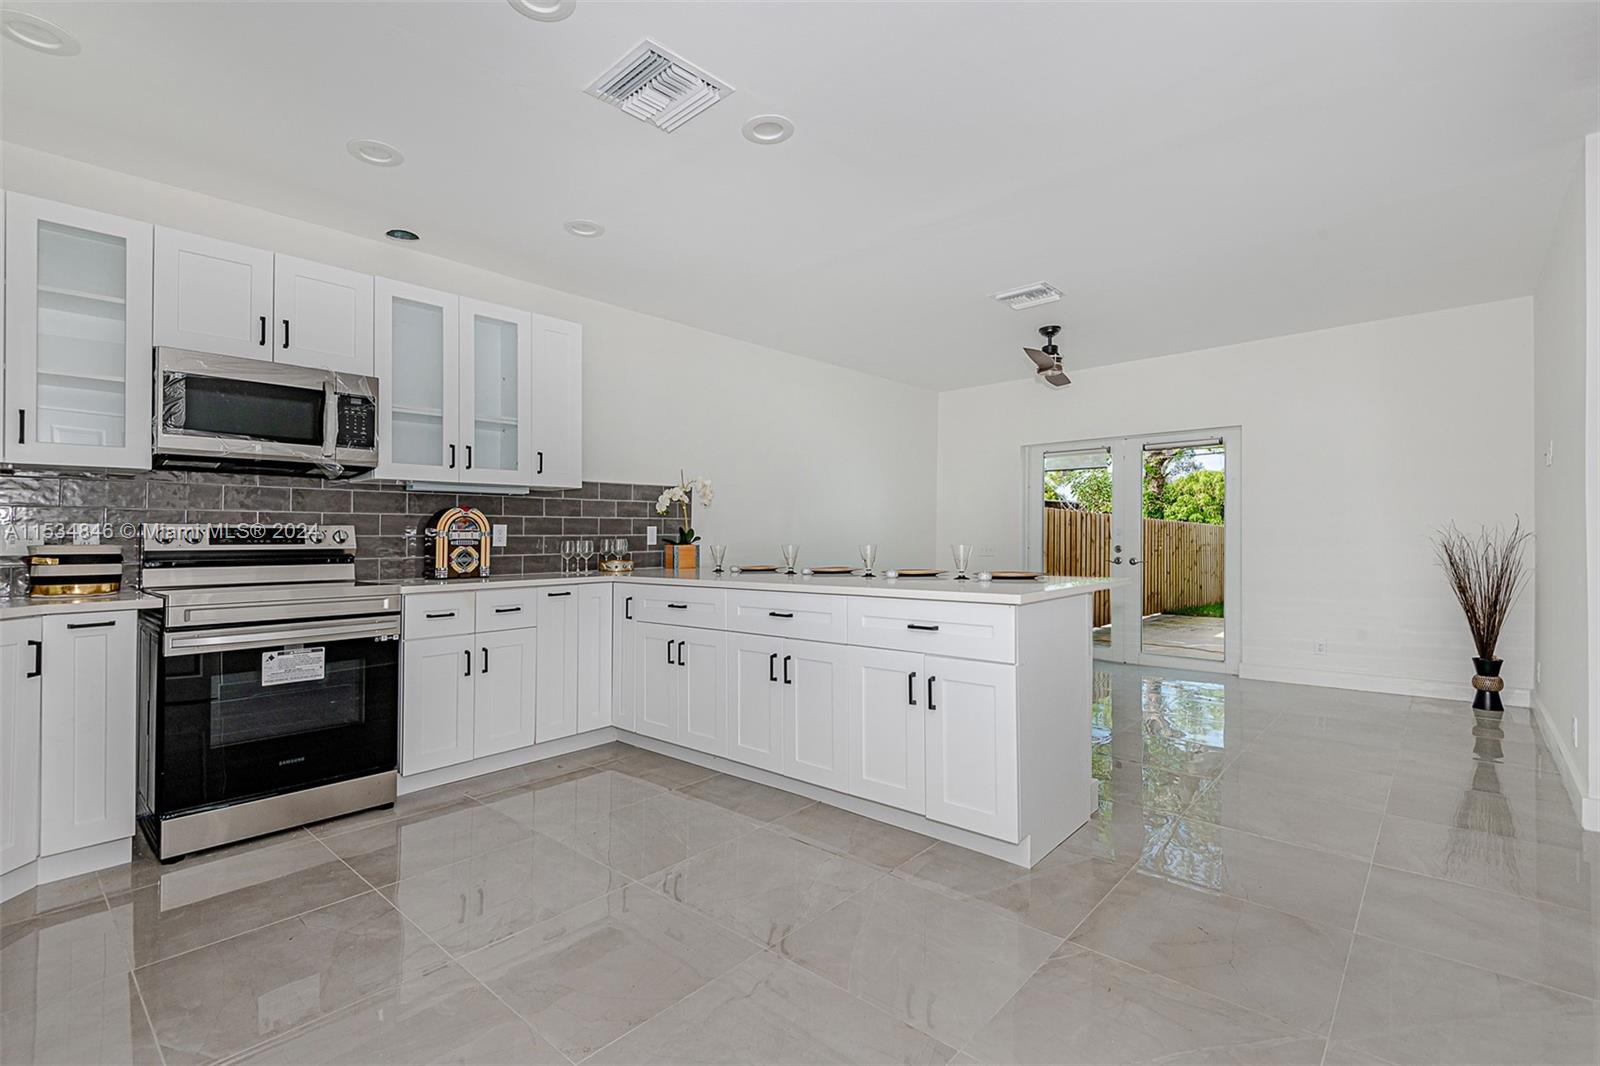 Rental Property at 1205 Nw 2nd Ave, Fort Lauderdale, Broward County, Florida -  - $950,000 MO.